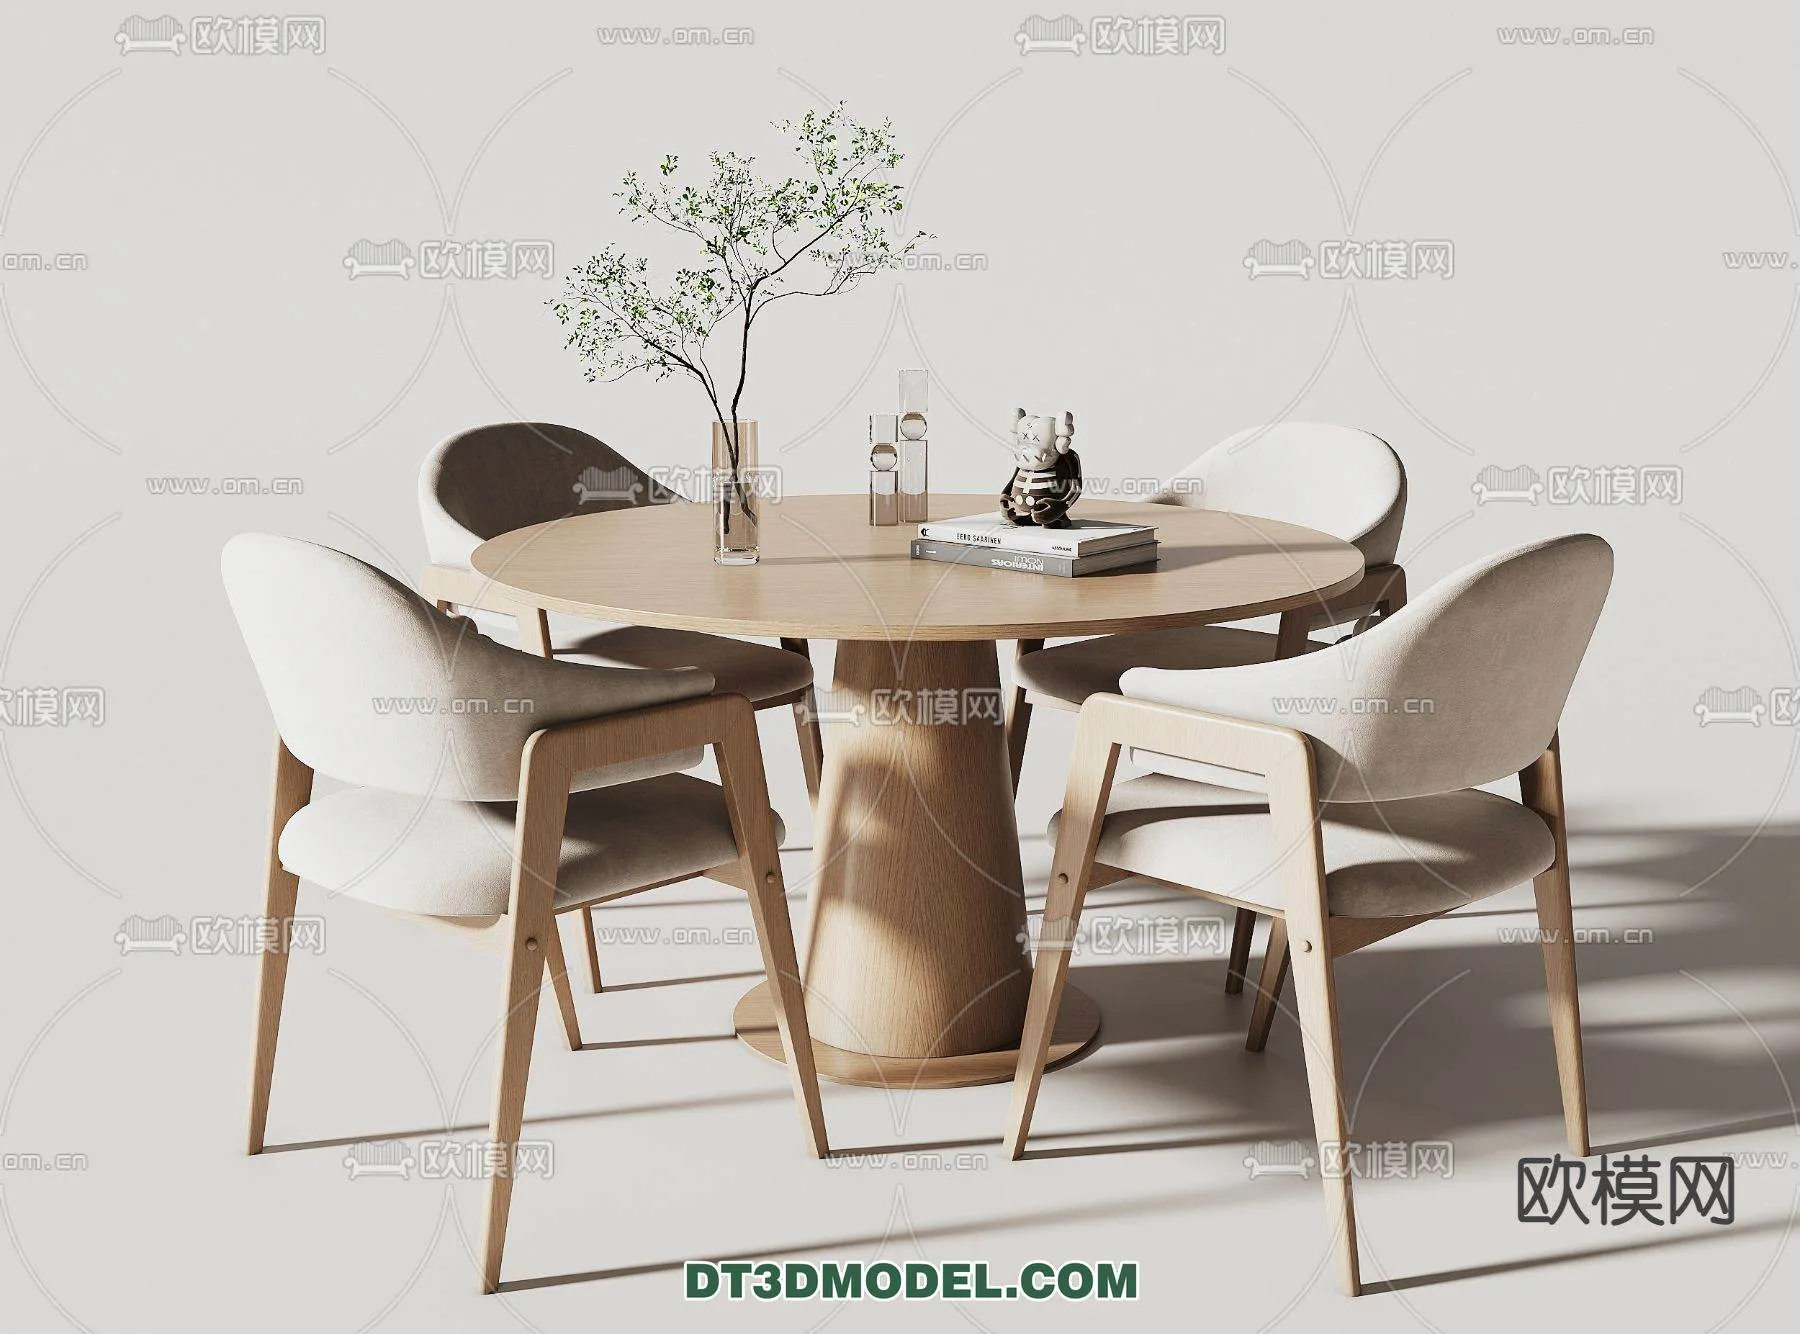 WABI SABI STYLE 3D MODELS – DINING TABLE – 0058